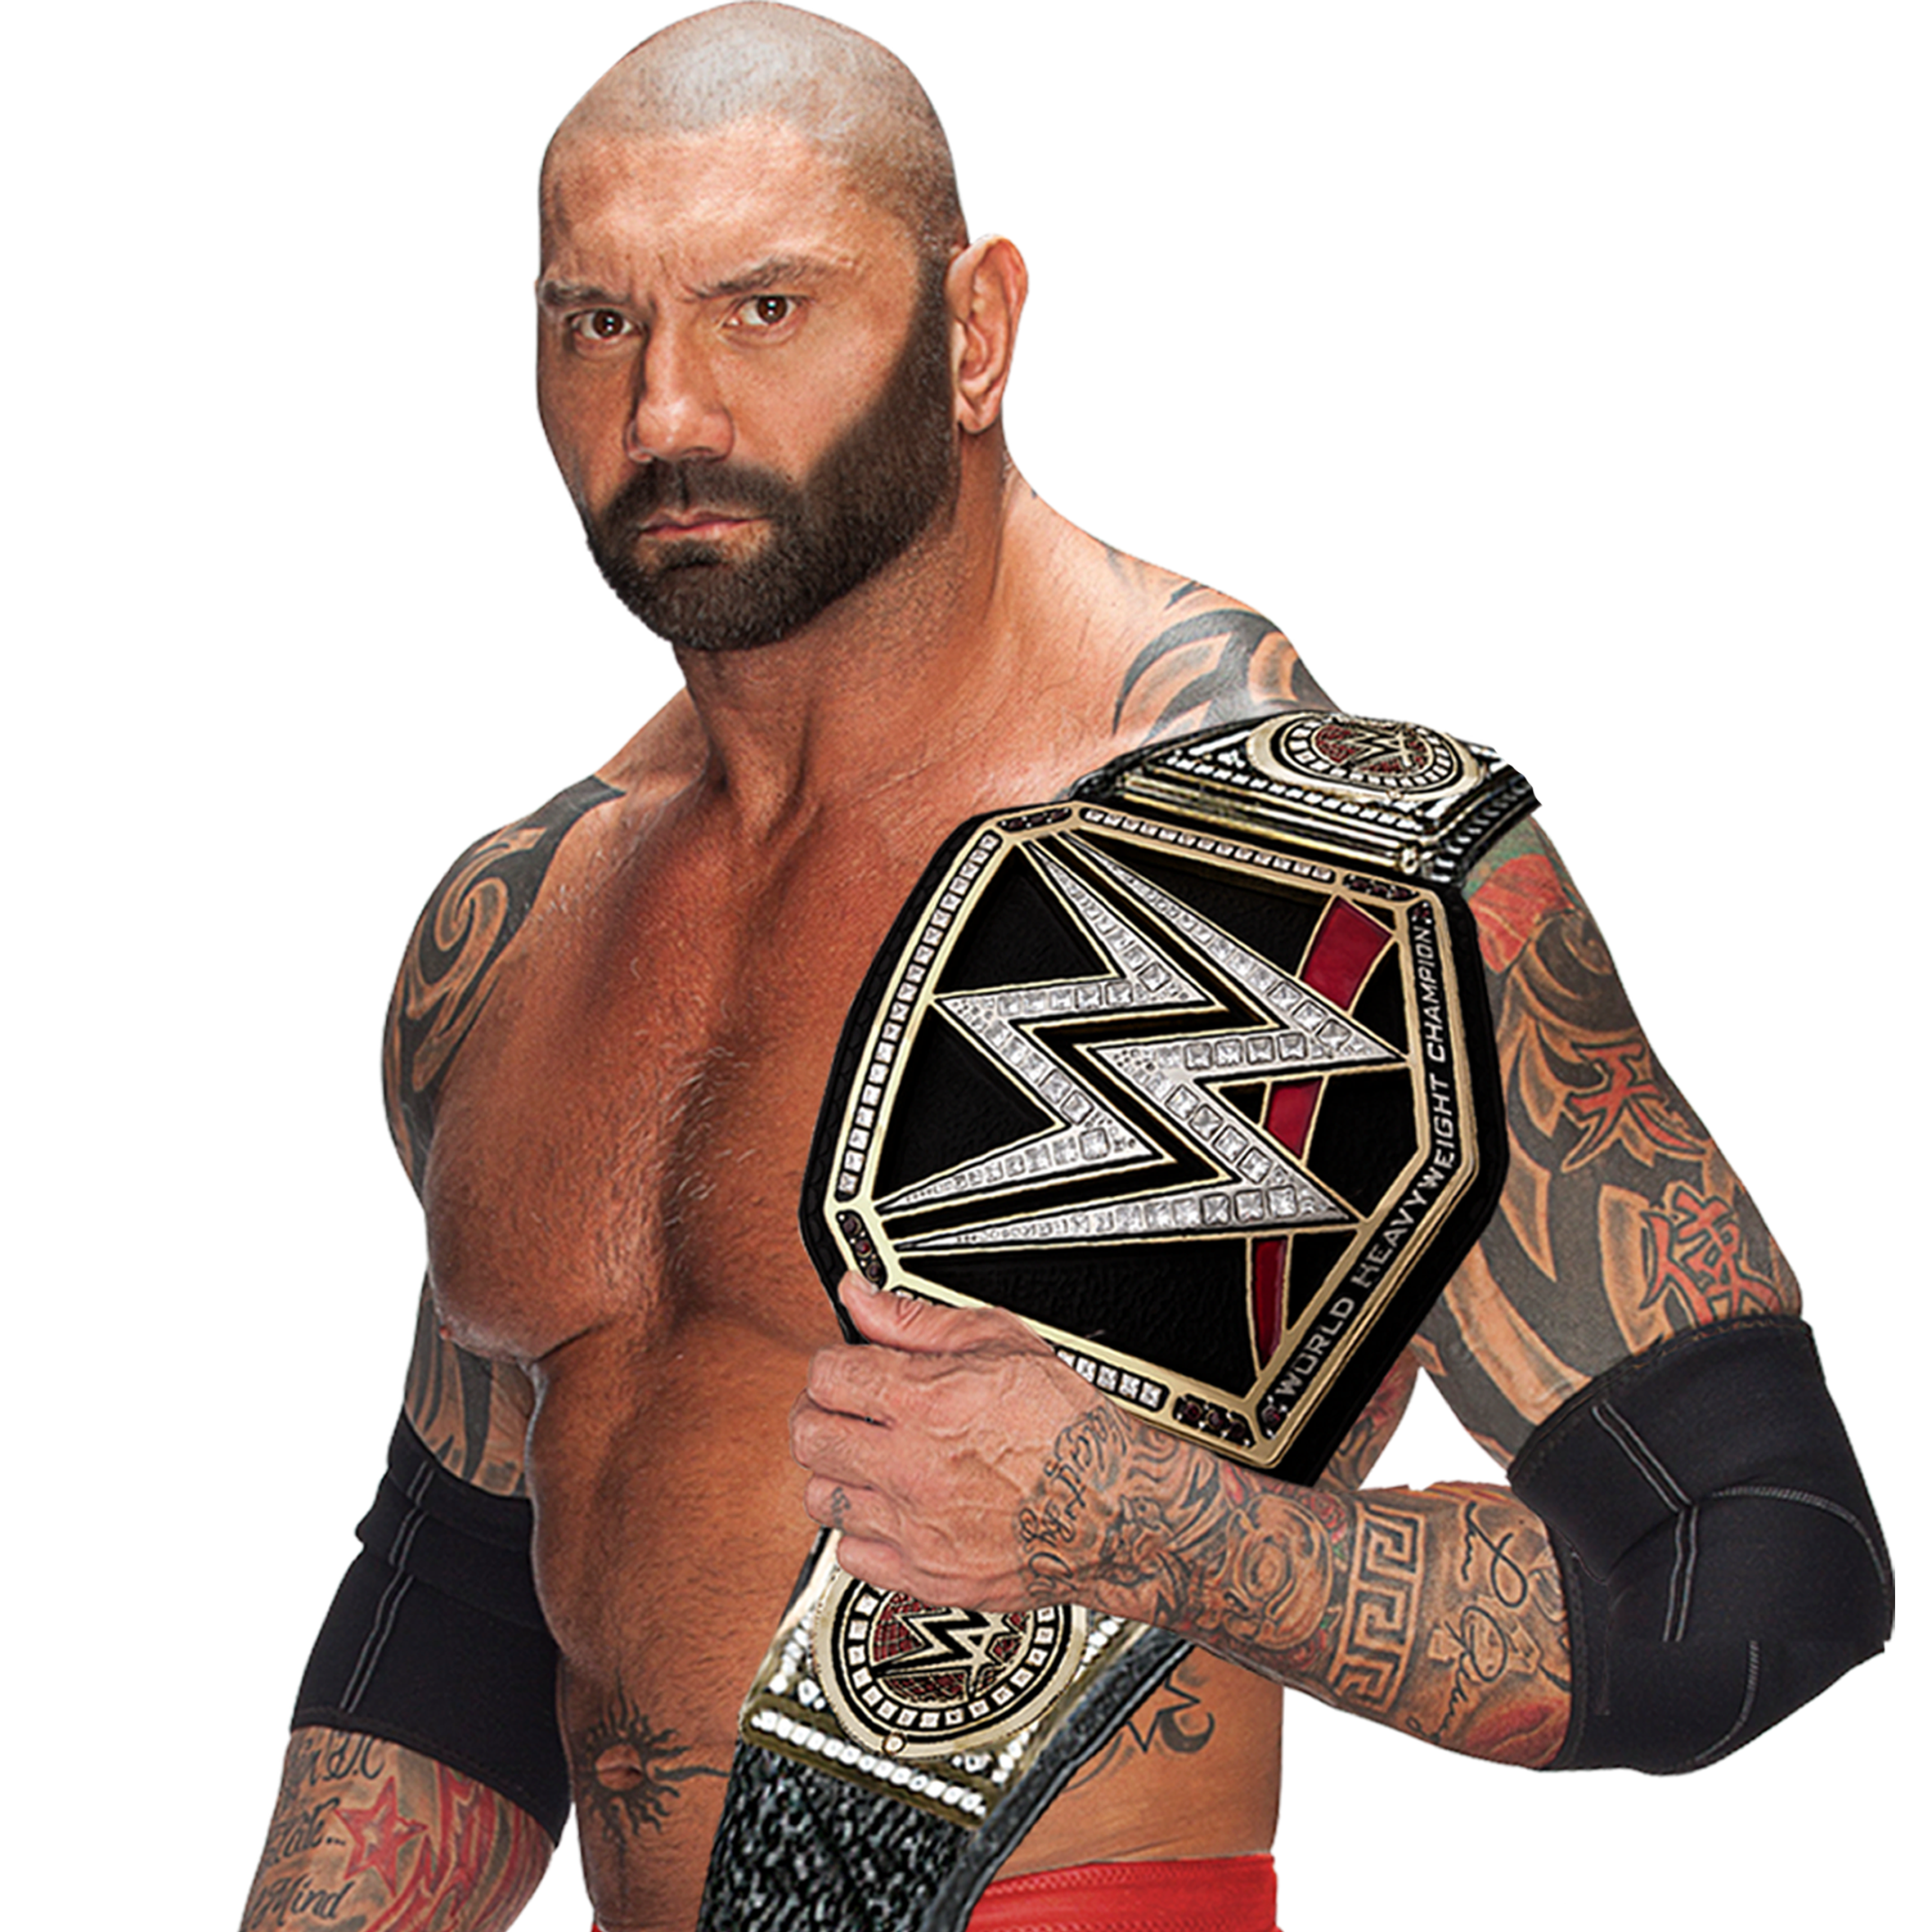 Batista Wwe World Heavyweight Championship By Islam Batista22 On